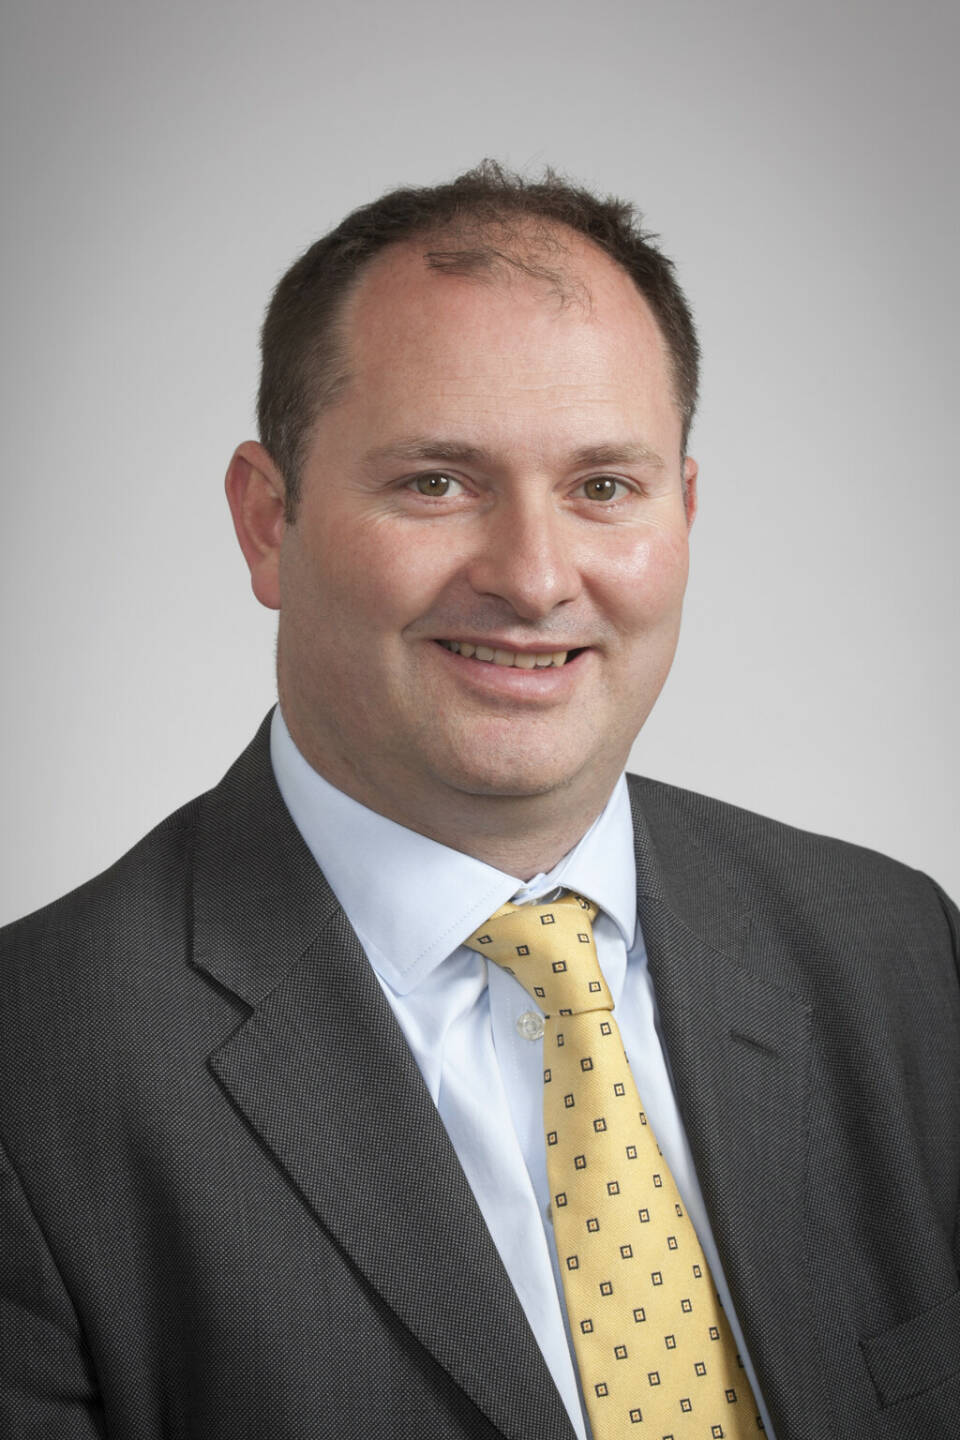 Jonathan Butler, Leiter des European Leveraged Finance Teams bei PGIM Fixed Income. Credit: PGIM